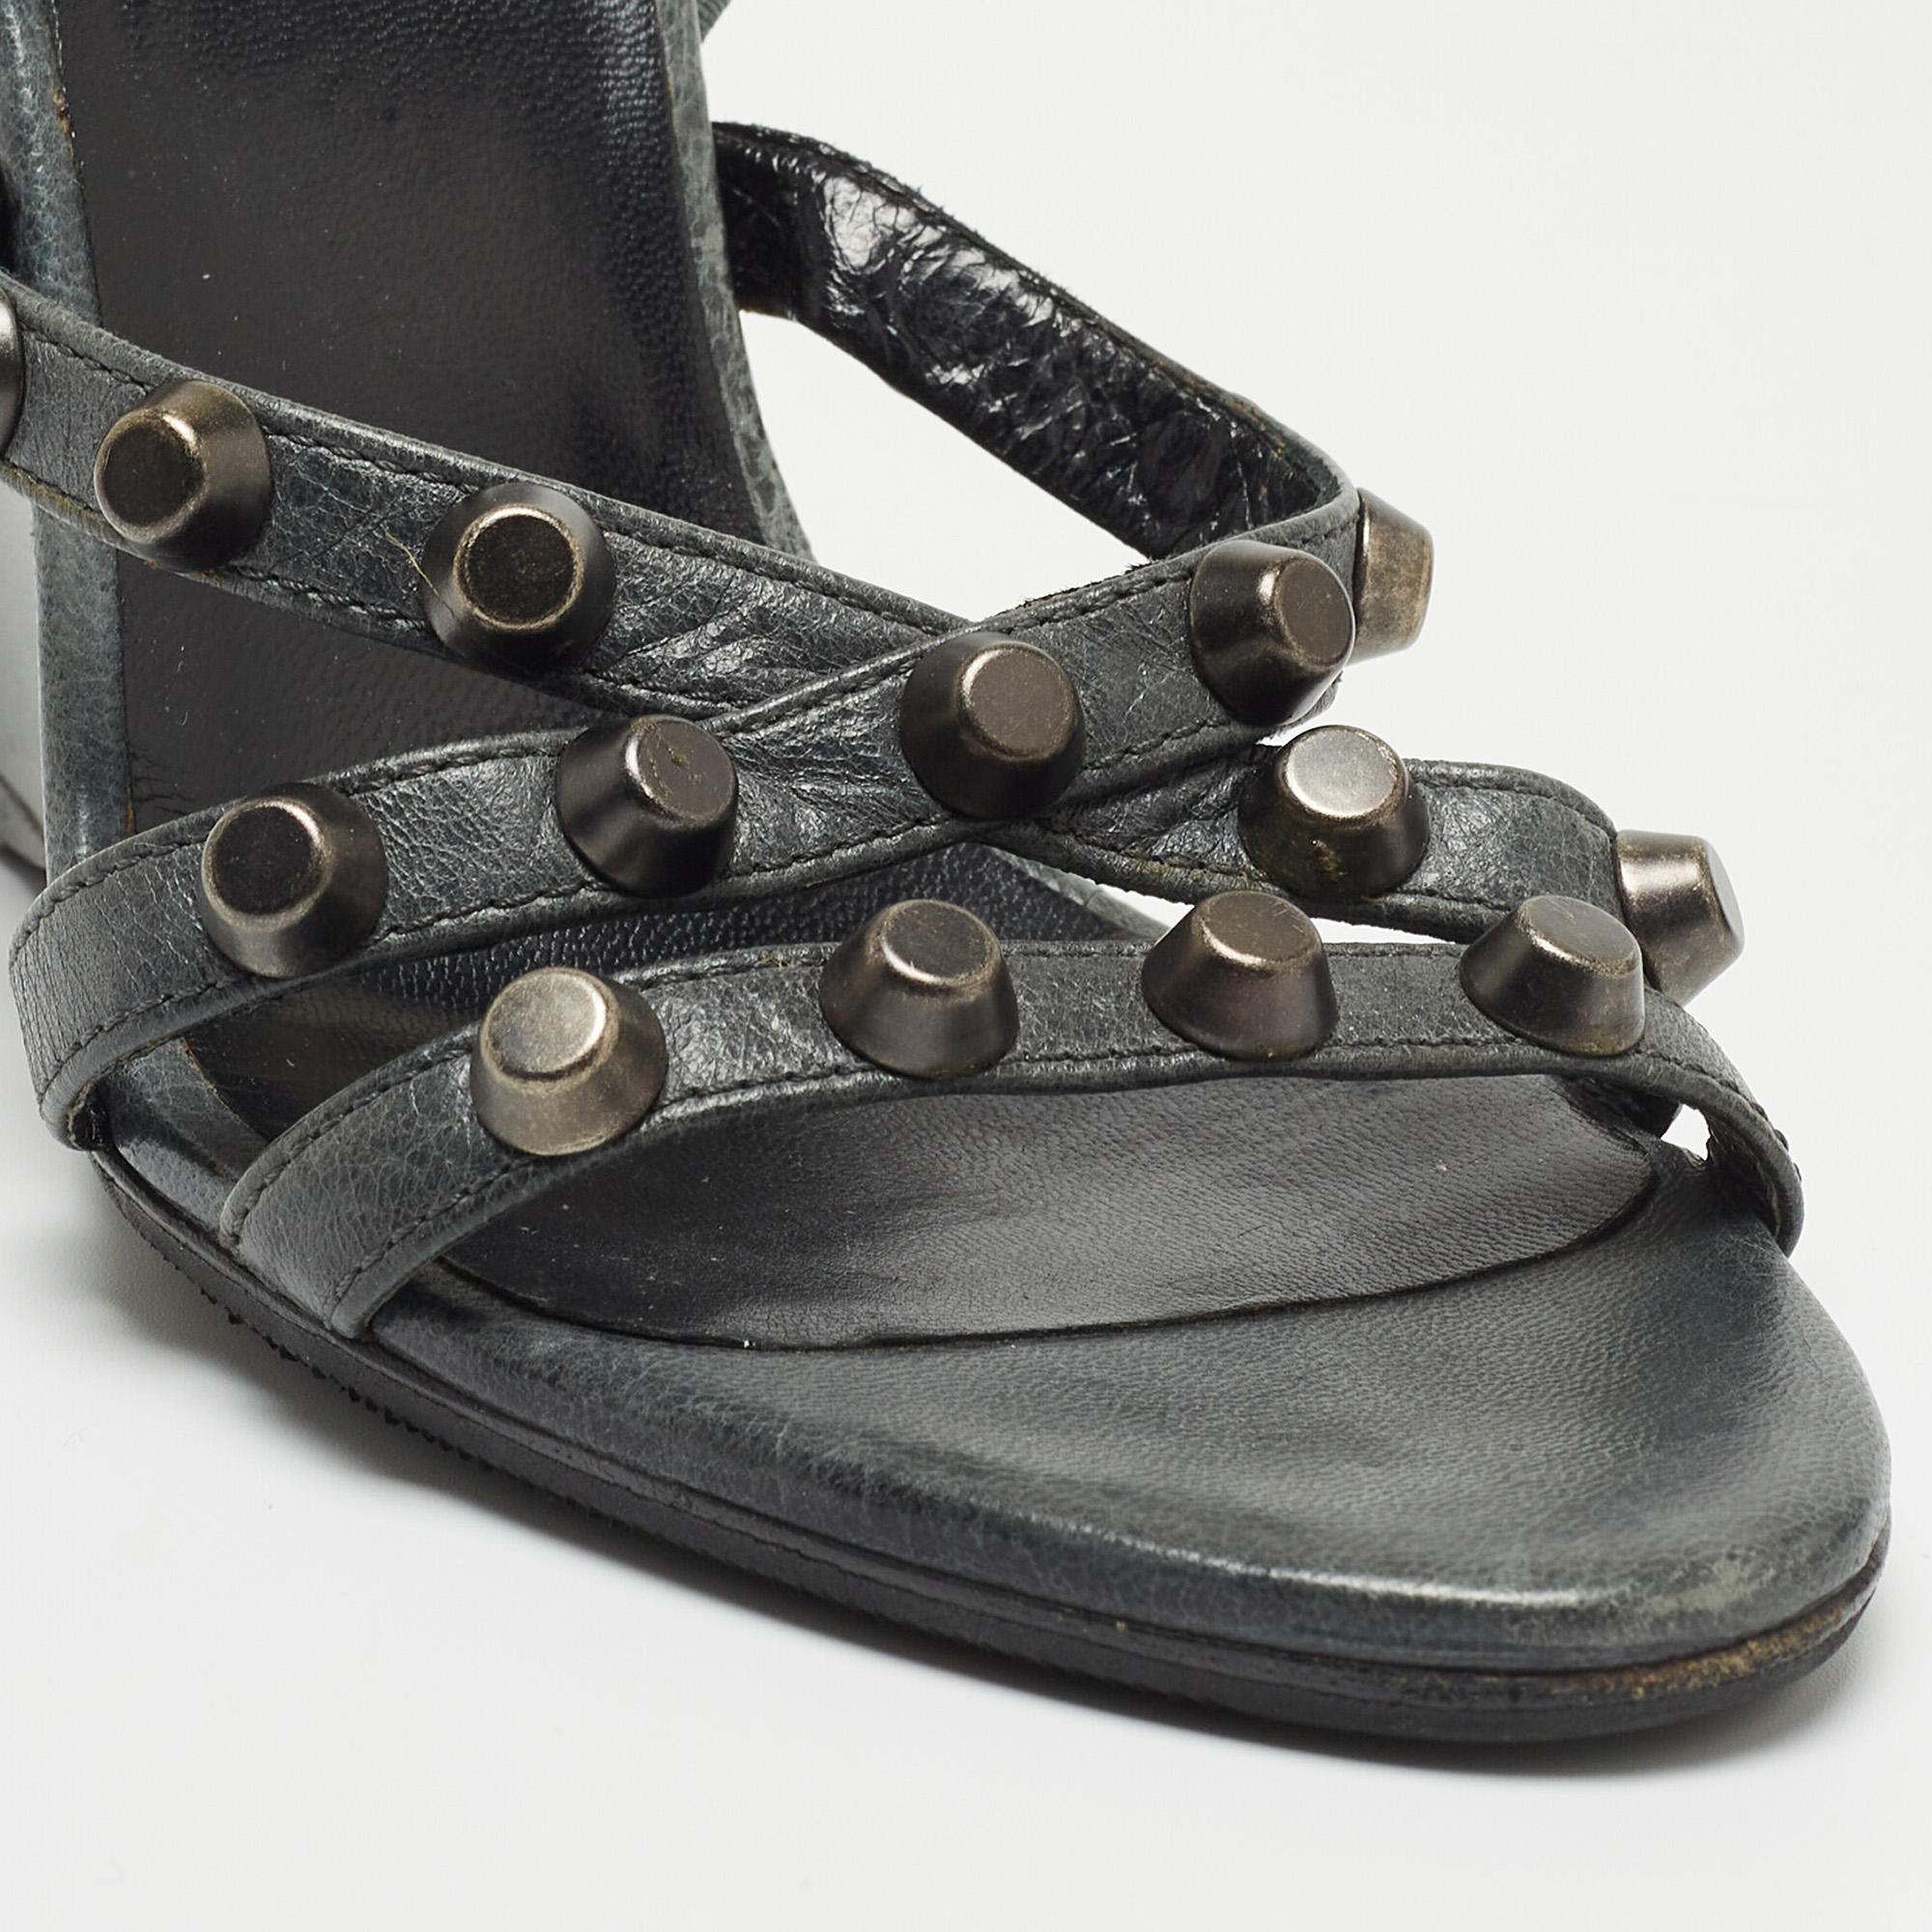 Balenciaga Grey Leather Studded Wedge Slingback Sandals Size 39